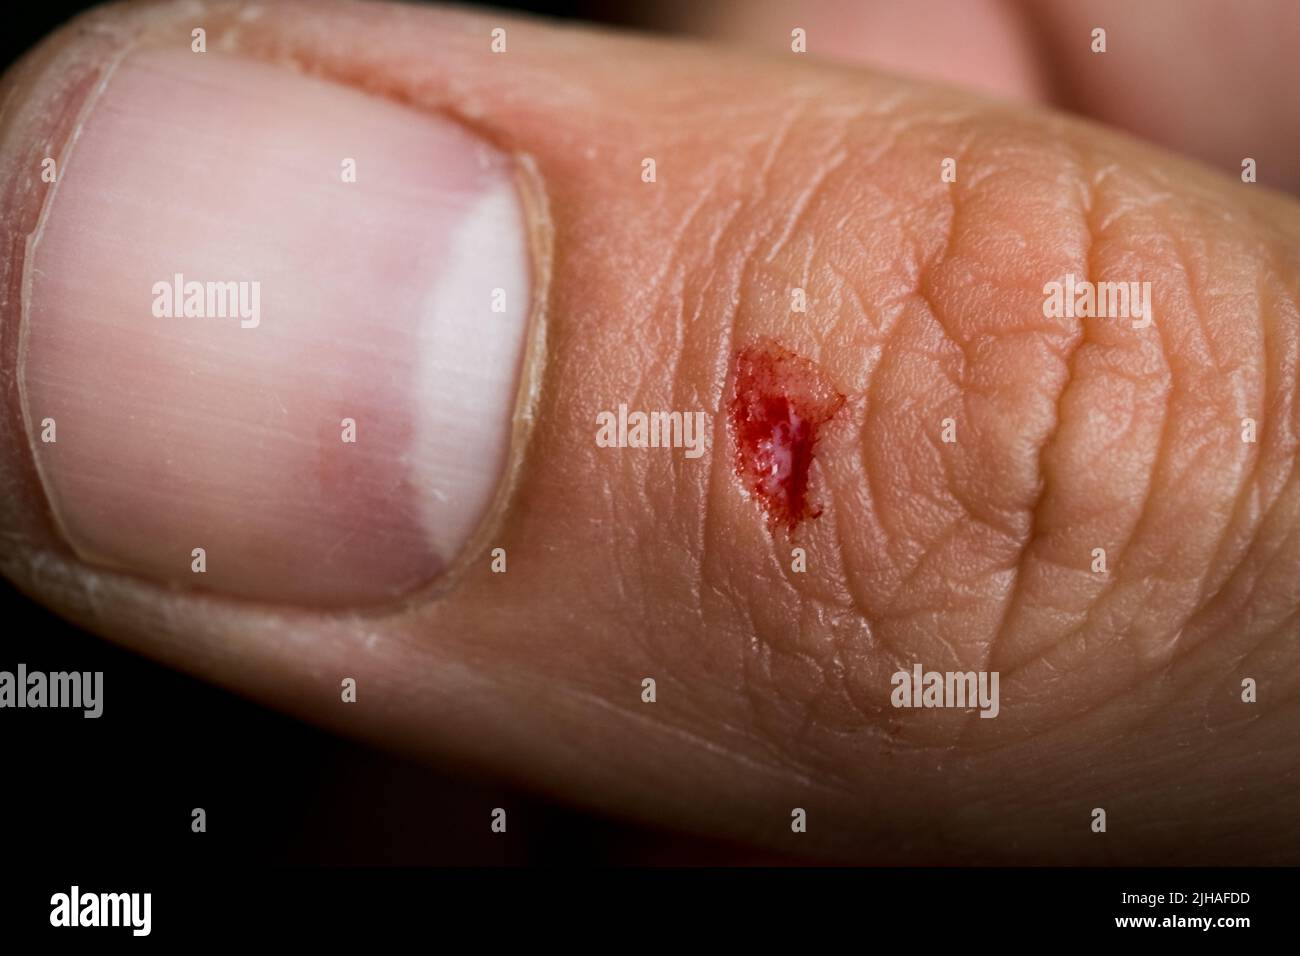 https://c8.alamy.com/comp/2JHAFDD/close-up-shot-of-a-small-and-deep-wound-on-a-thumb-2JHAFDD.jpg